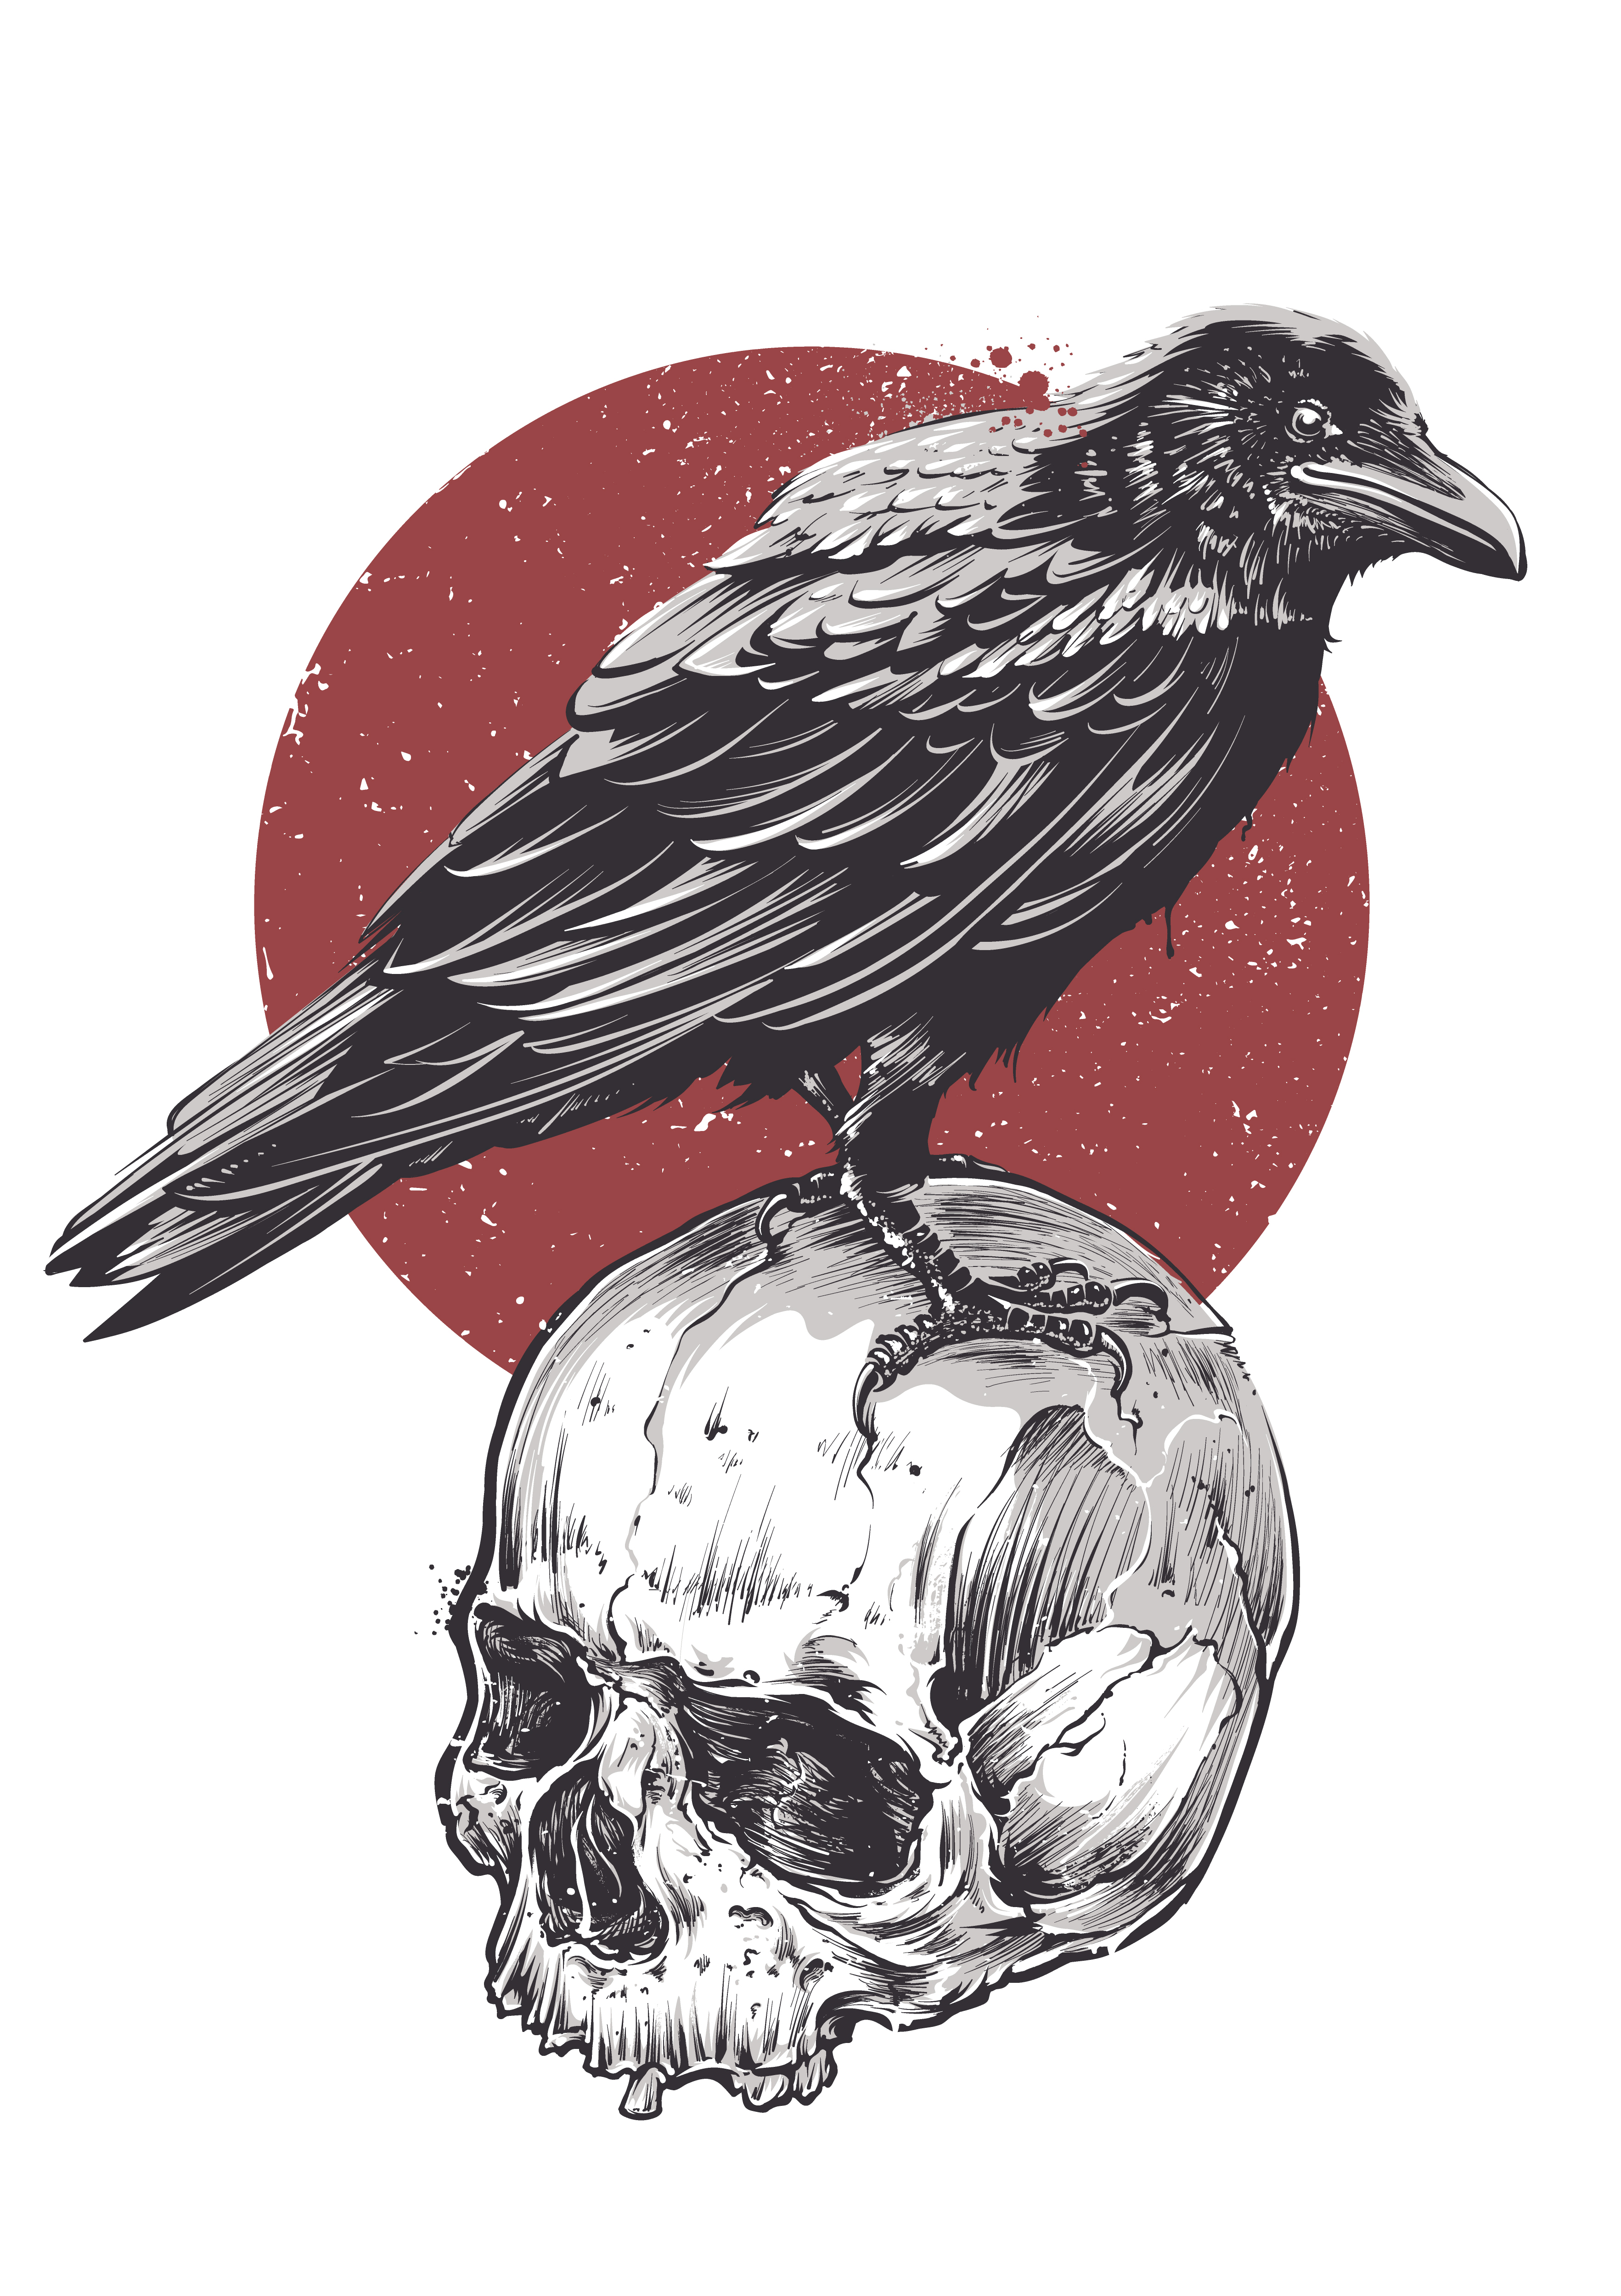 Raven on Skull 338376 - Download Free Vectors, Clipart Graphics